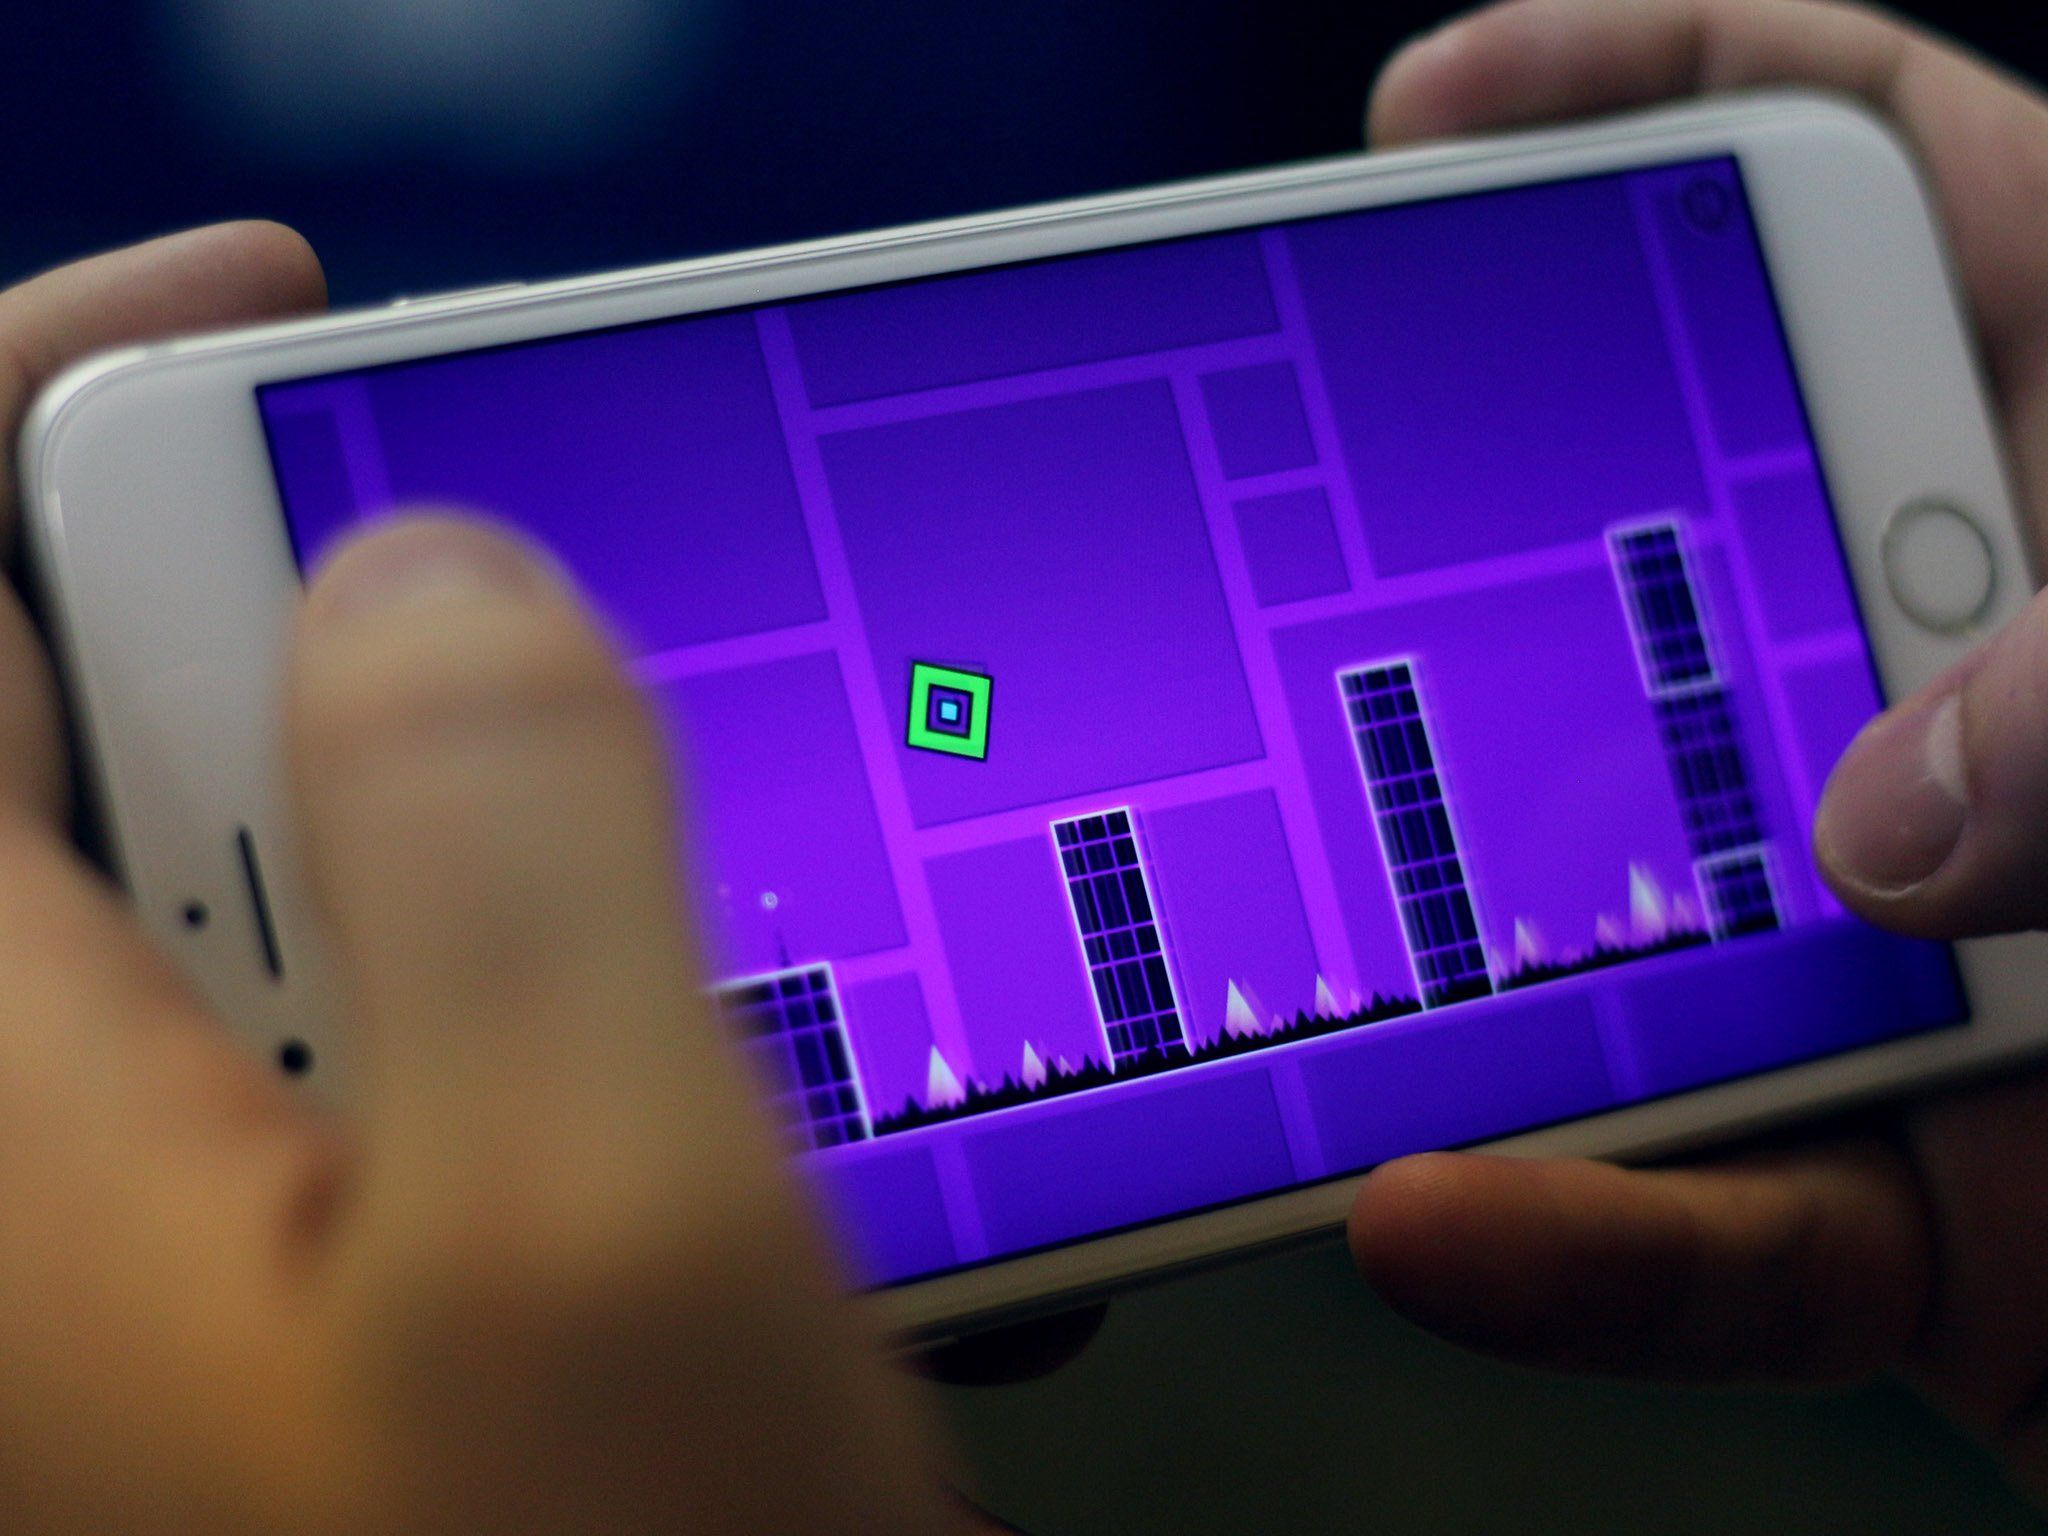 Geometry Dash Lite on the App Store